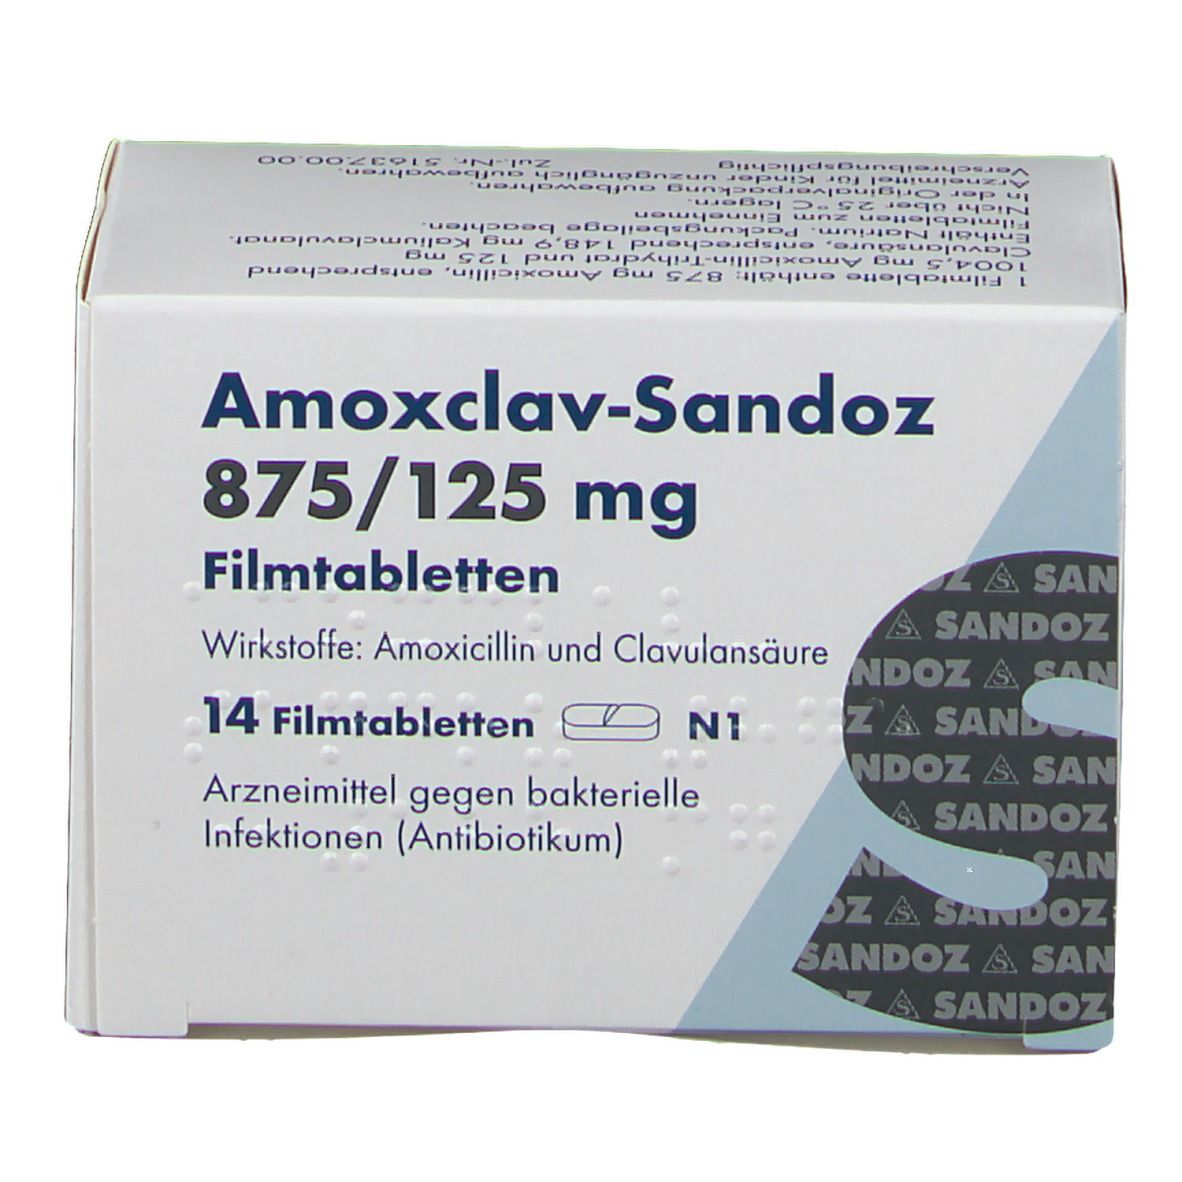 Amoxclav-Sanddoz 875/125mg Filmtabletten